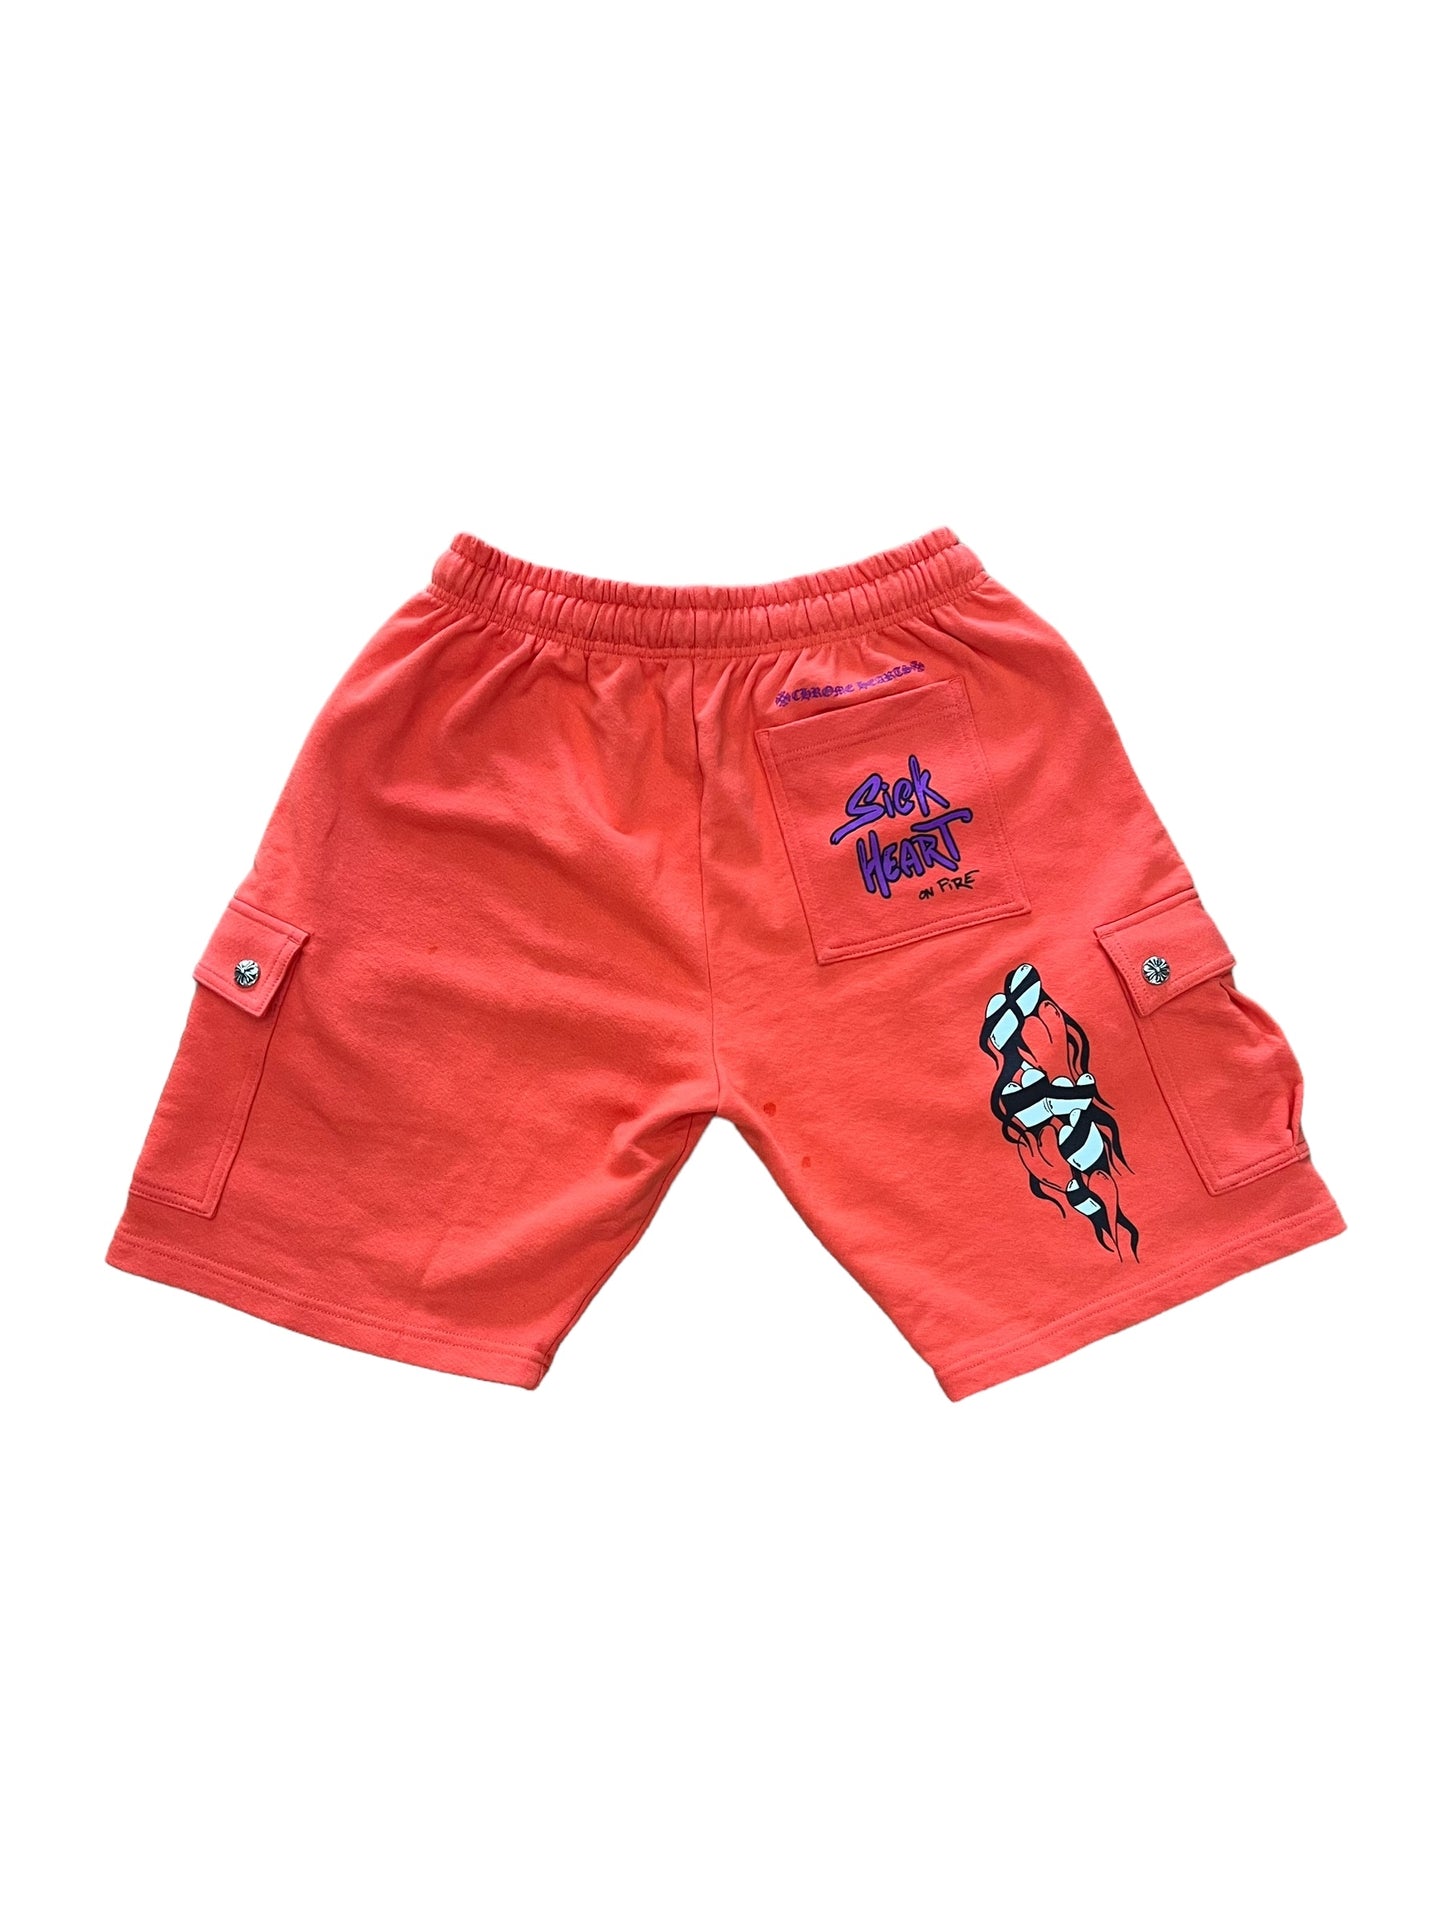 Chrome Hearts Matty Boy Spark Cargo Sweat Shorts size L new